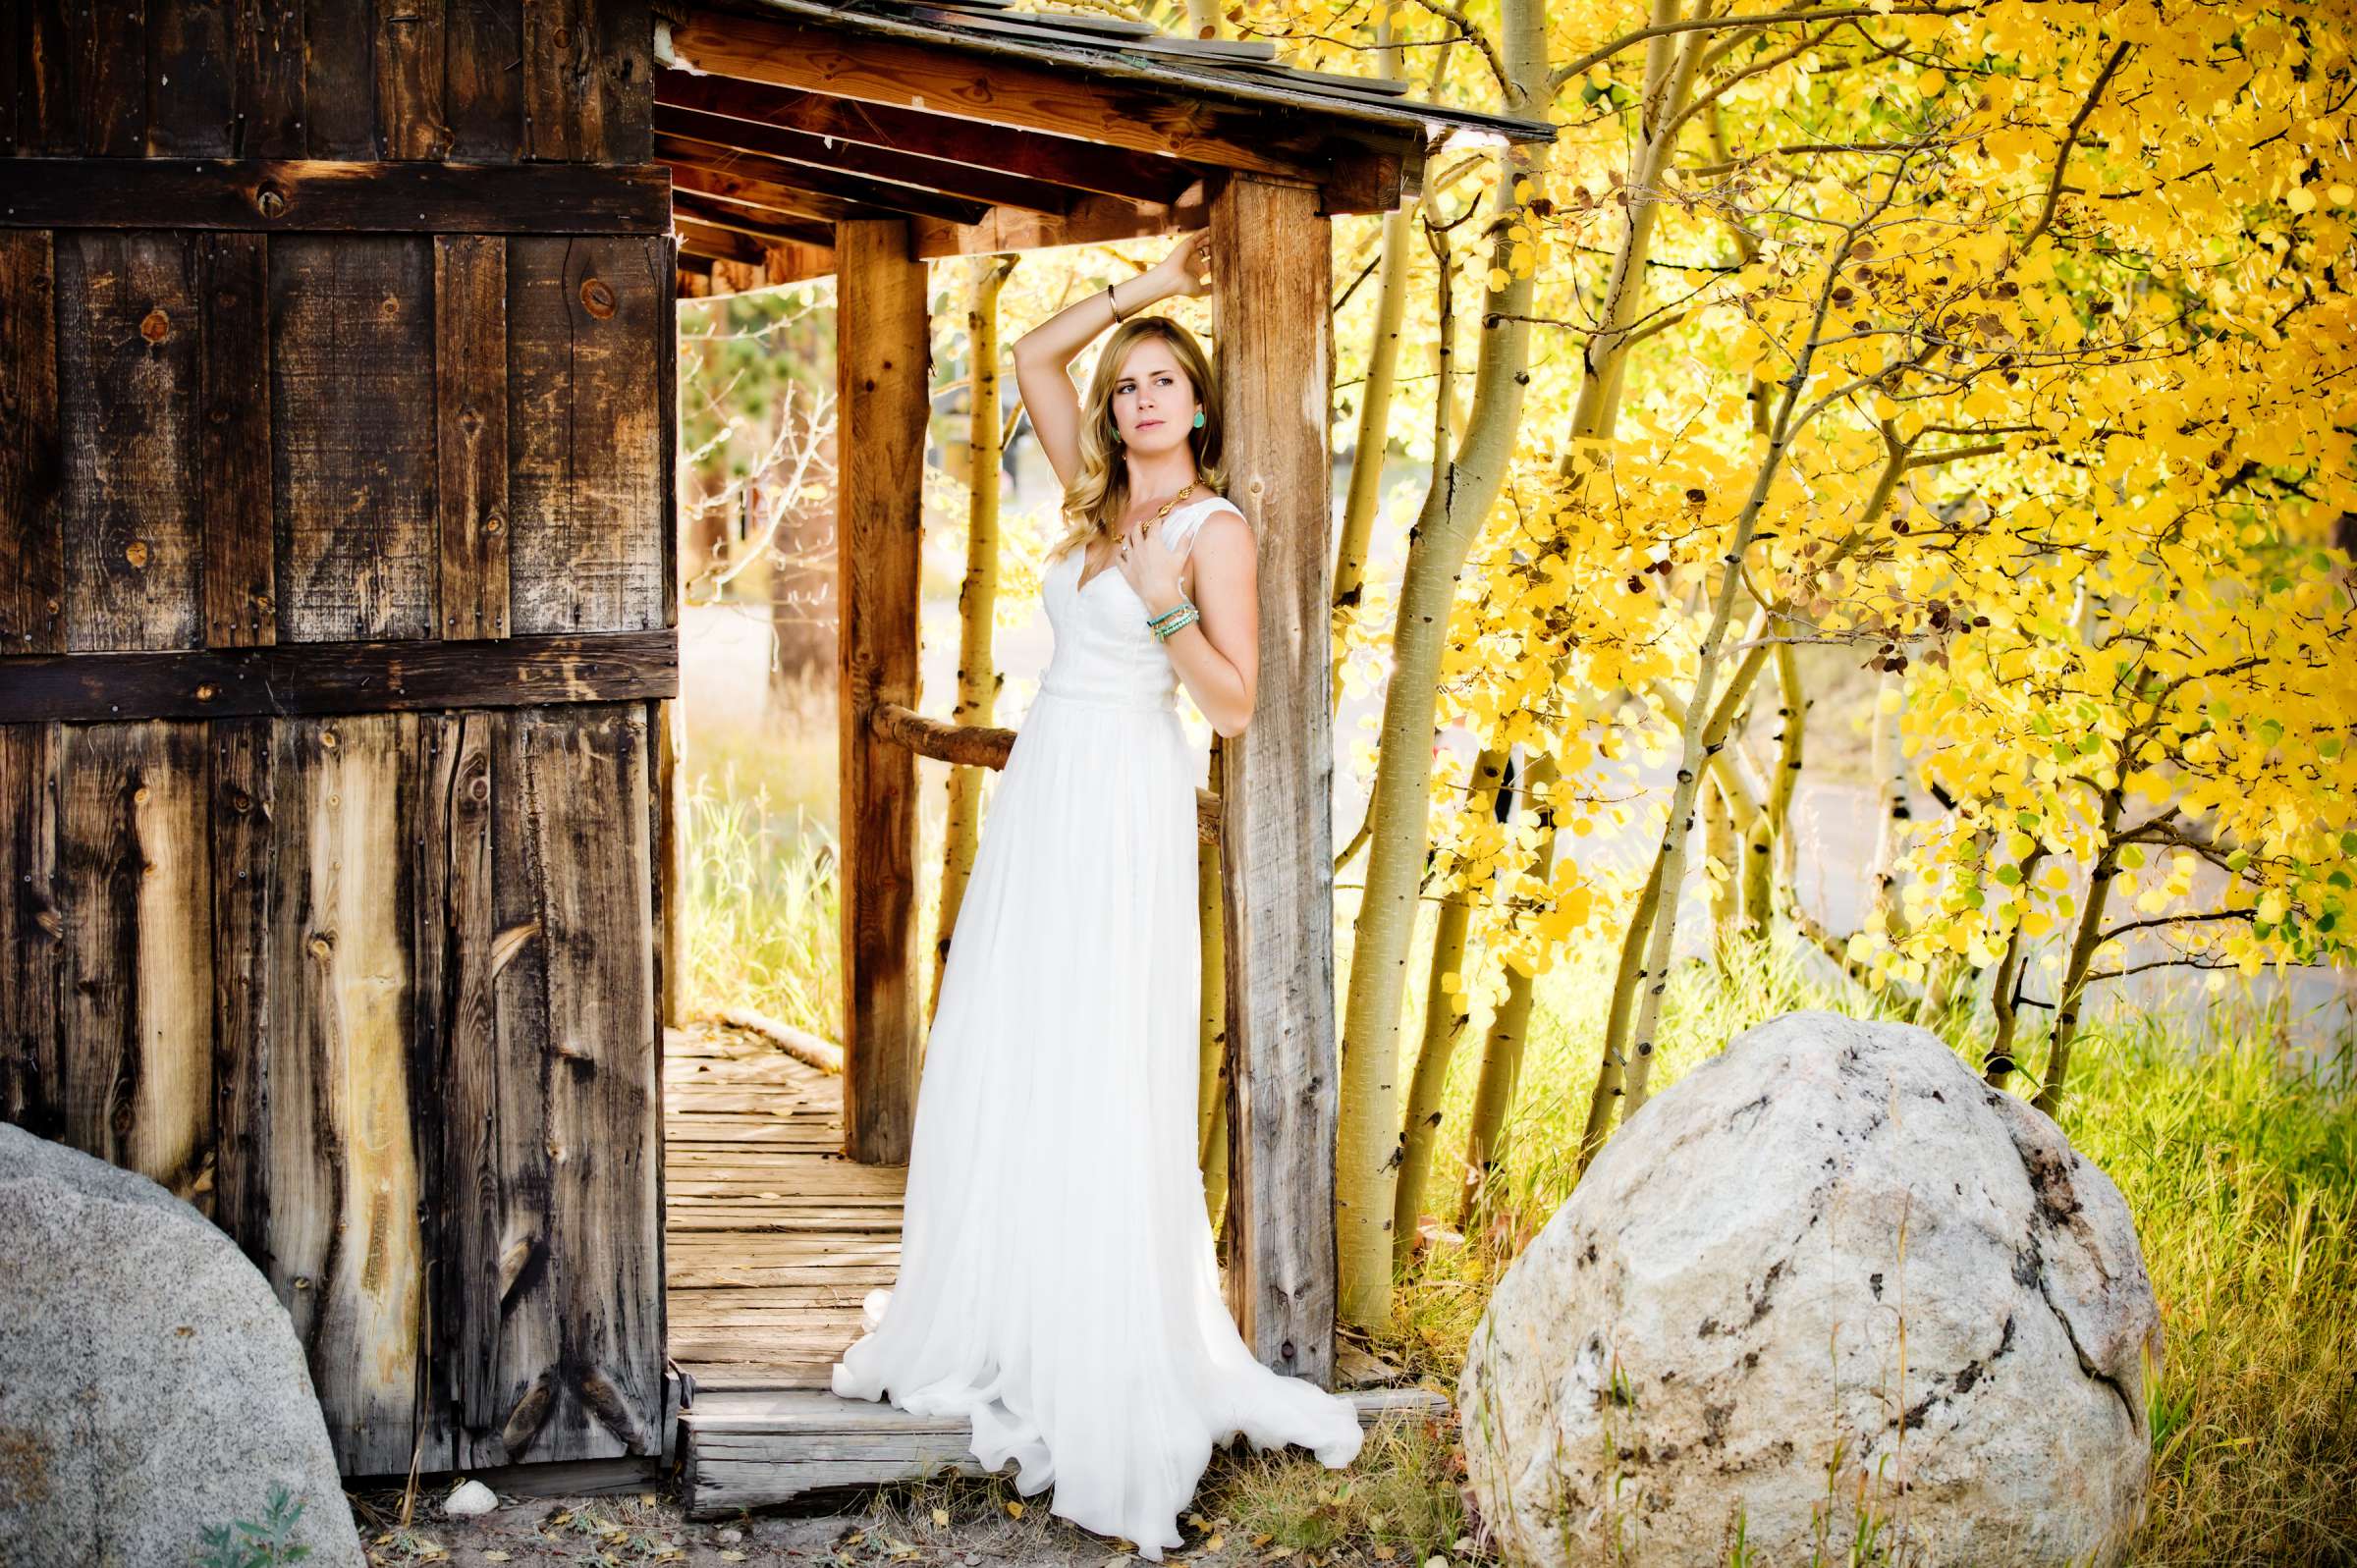 Wild Basin Lodge Wedding, Fall Leaves Wedding Photo #1 by True Photography